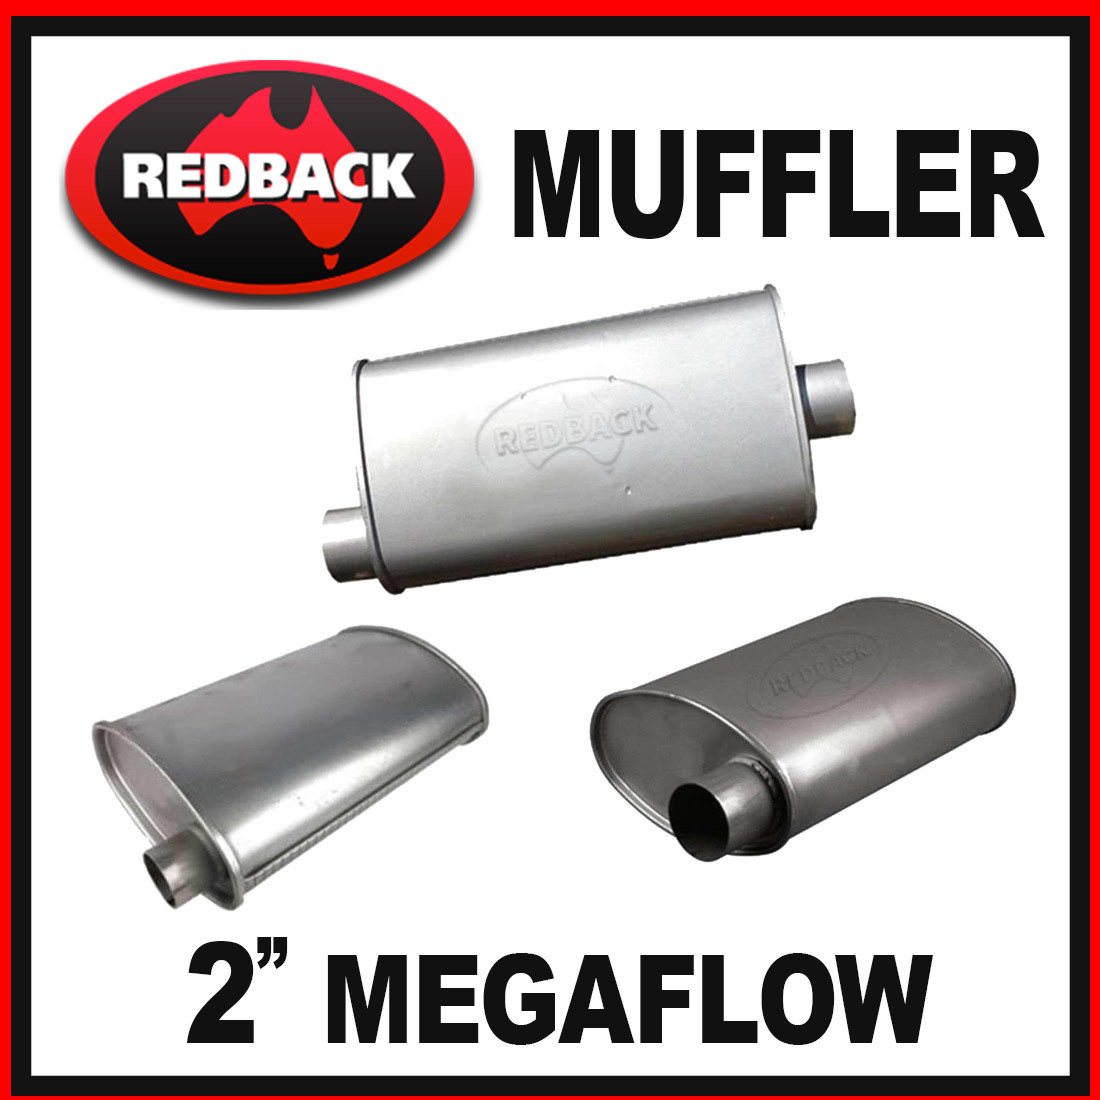 Redback 2" Megaflow Muffler image